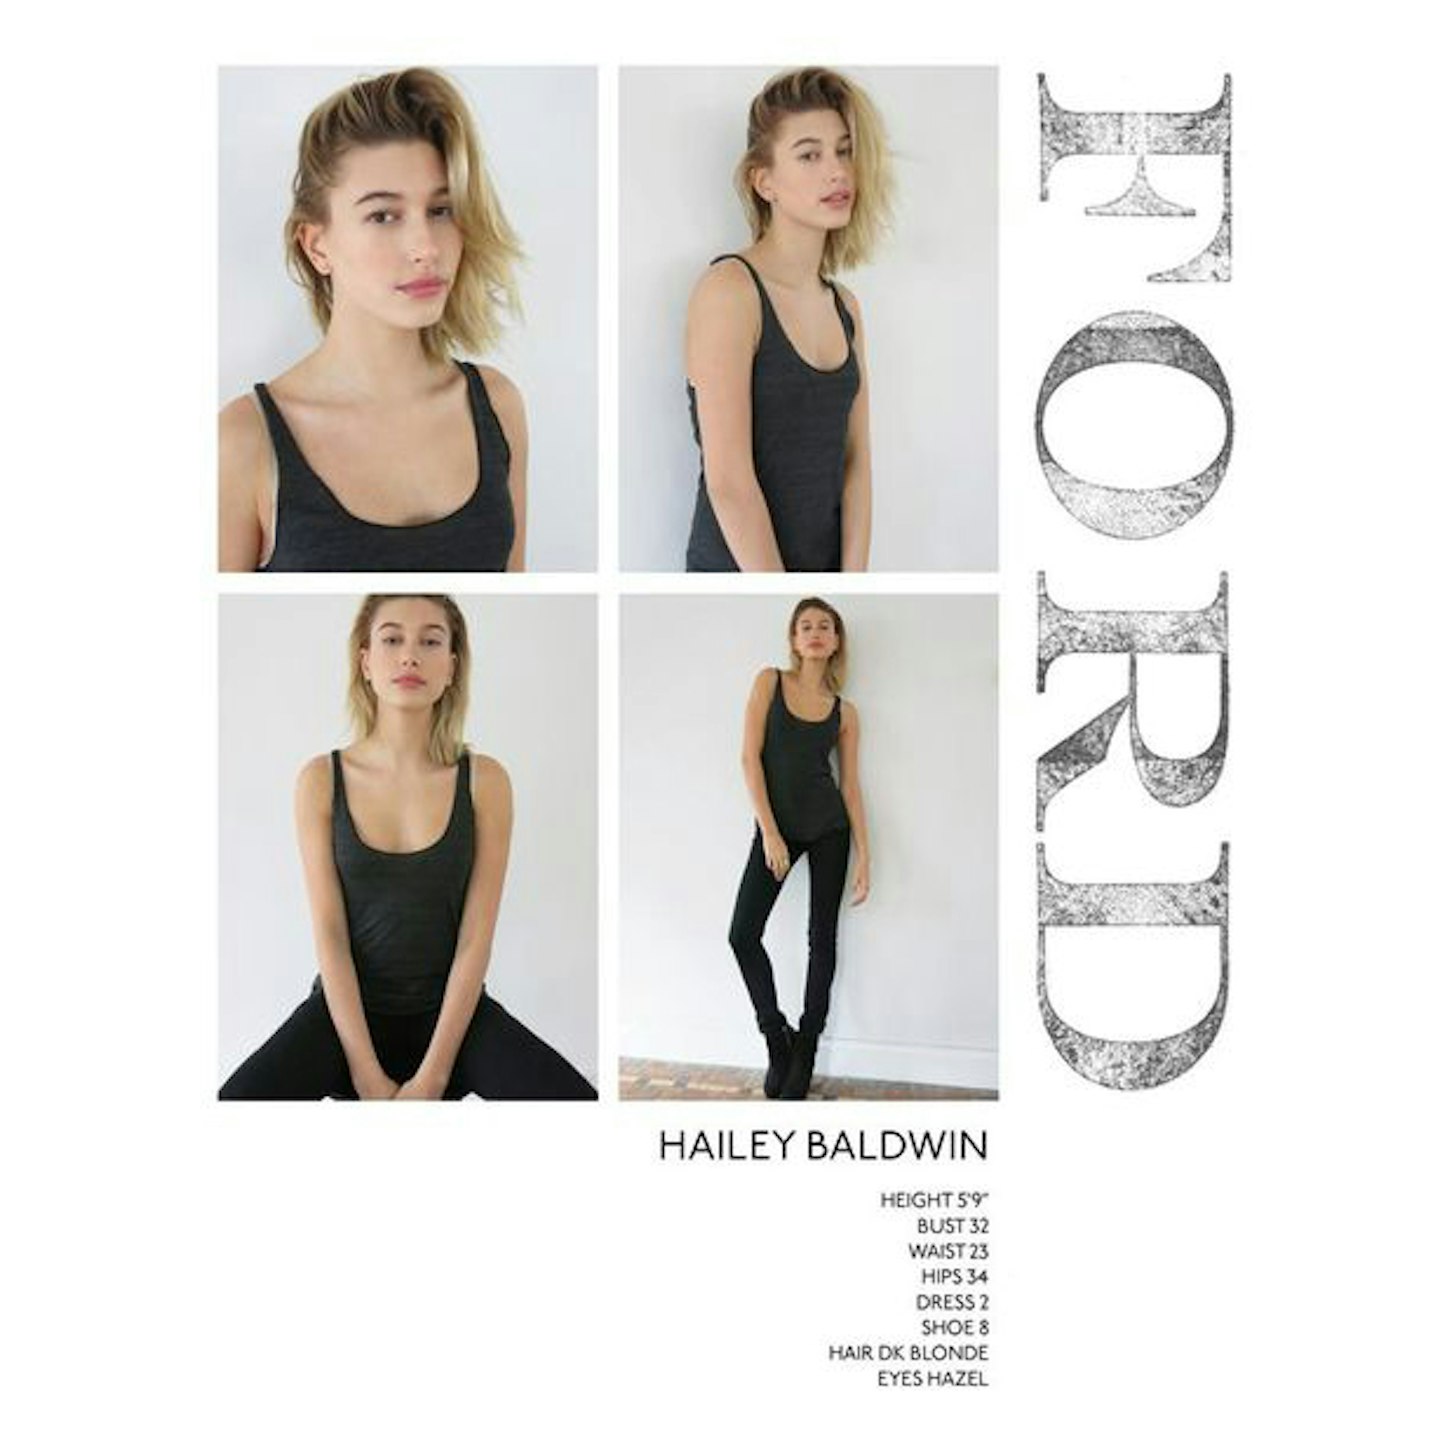 Hailey Baldwin Bieber Model Test shots polaroids digitals